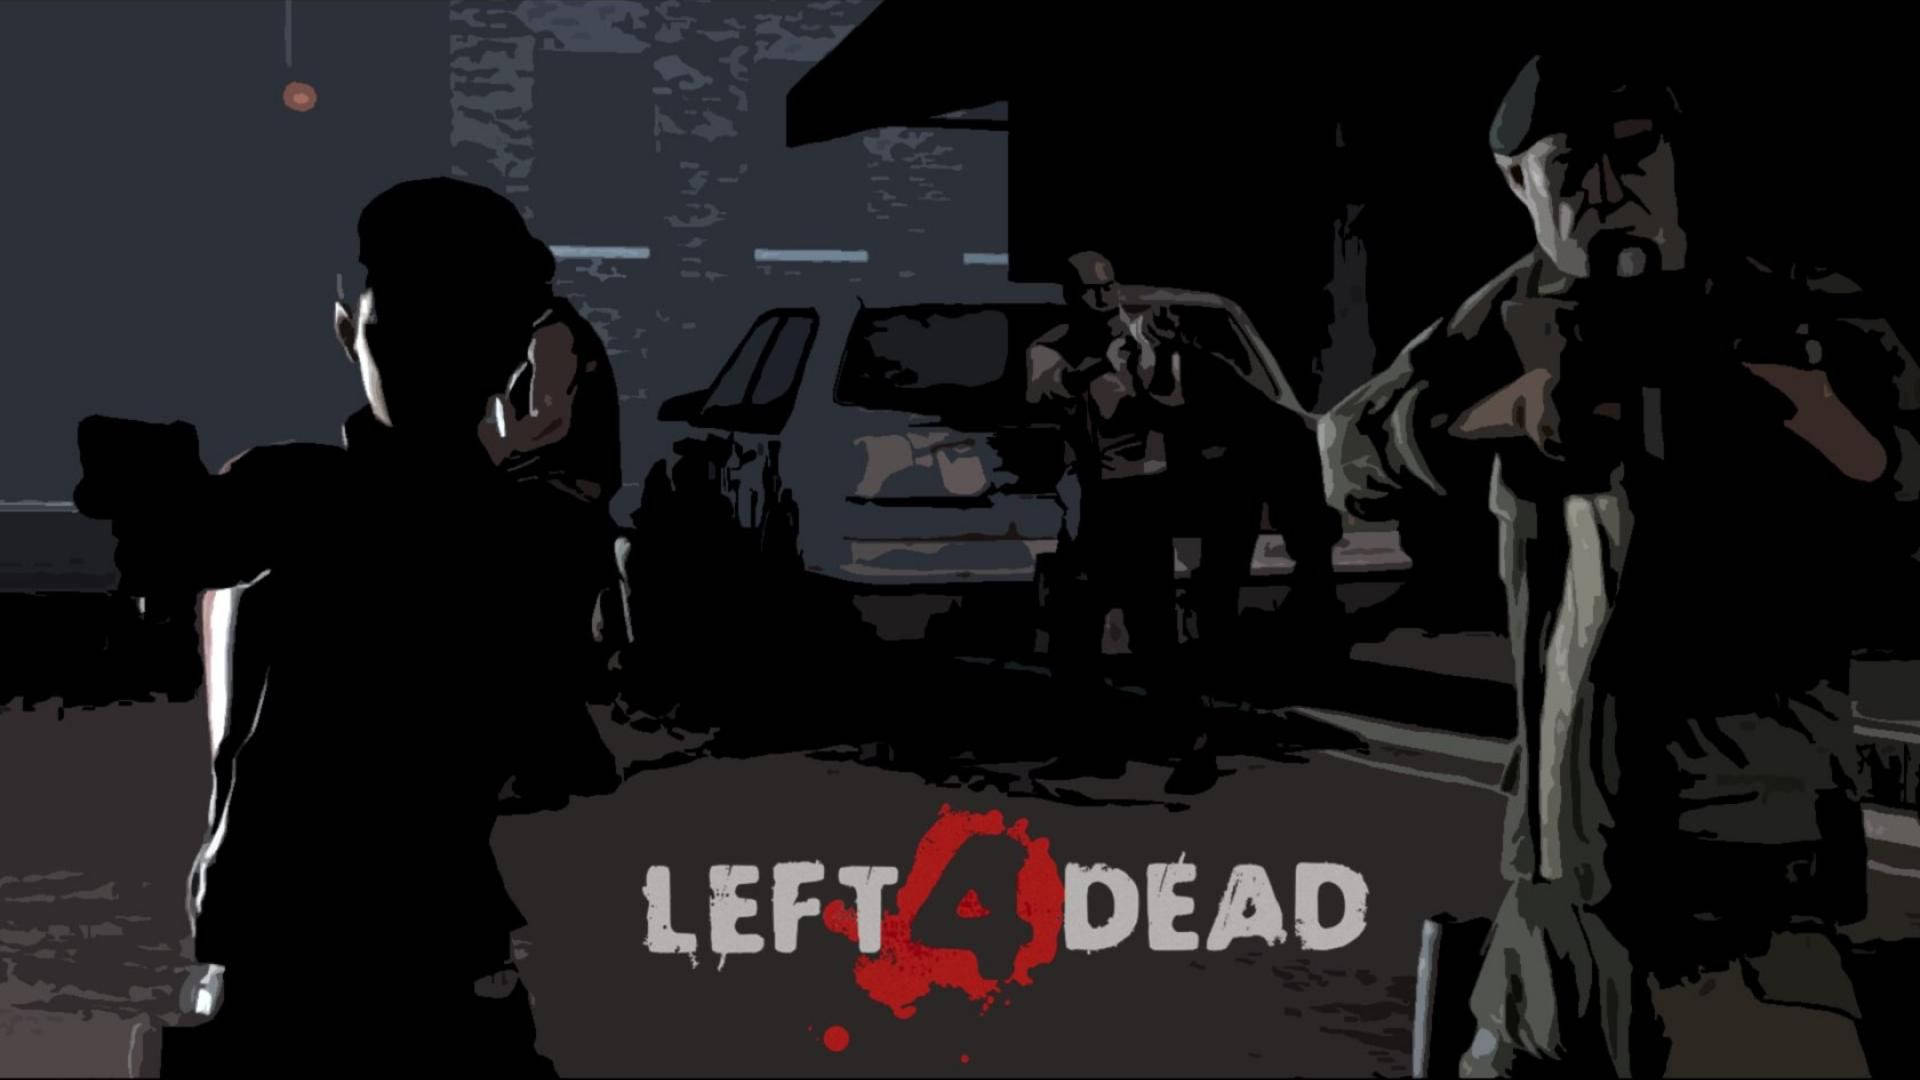 Left 4 Dead Dark Poster Background